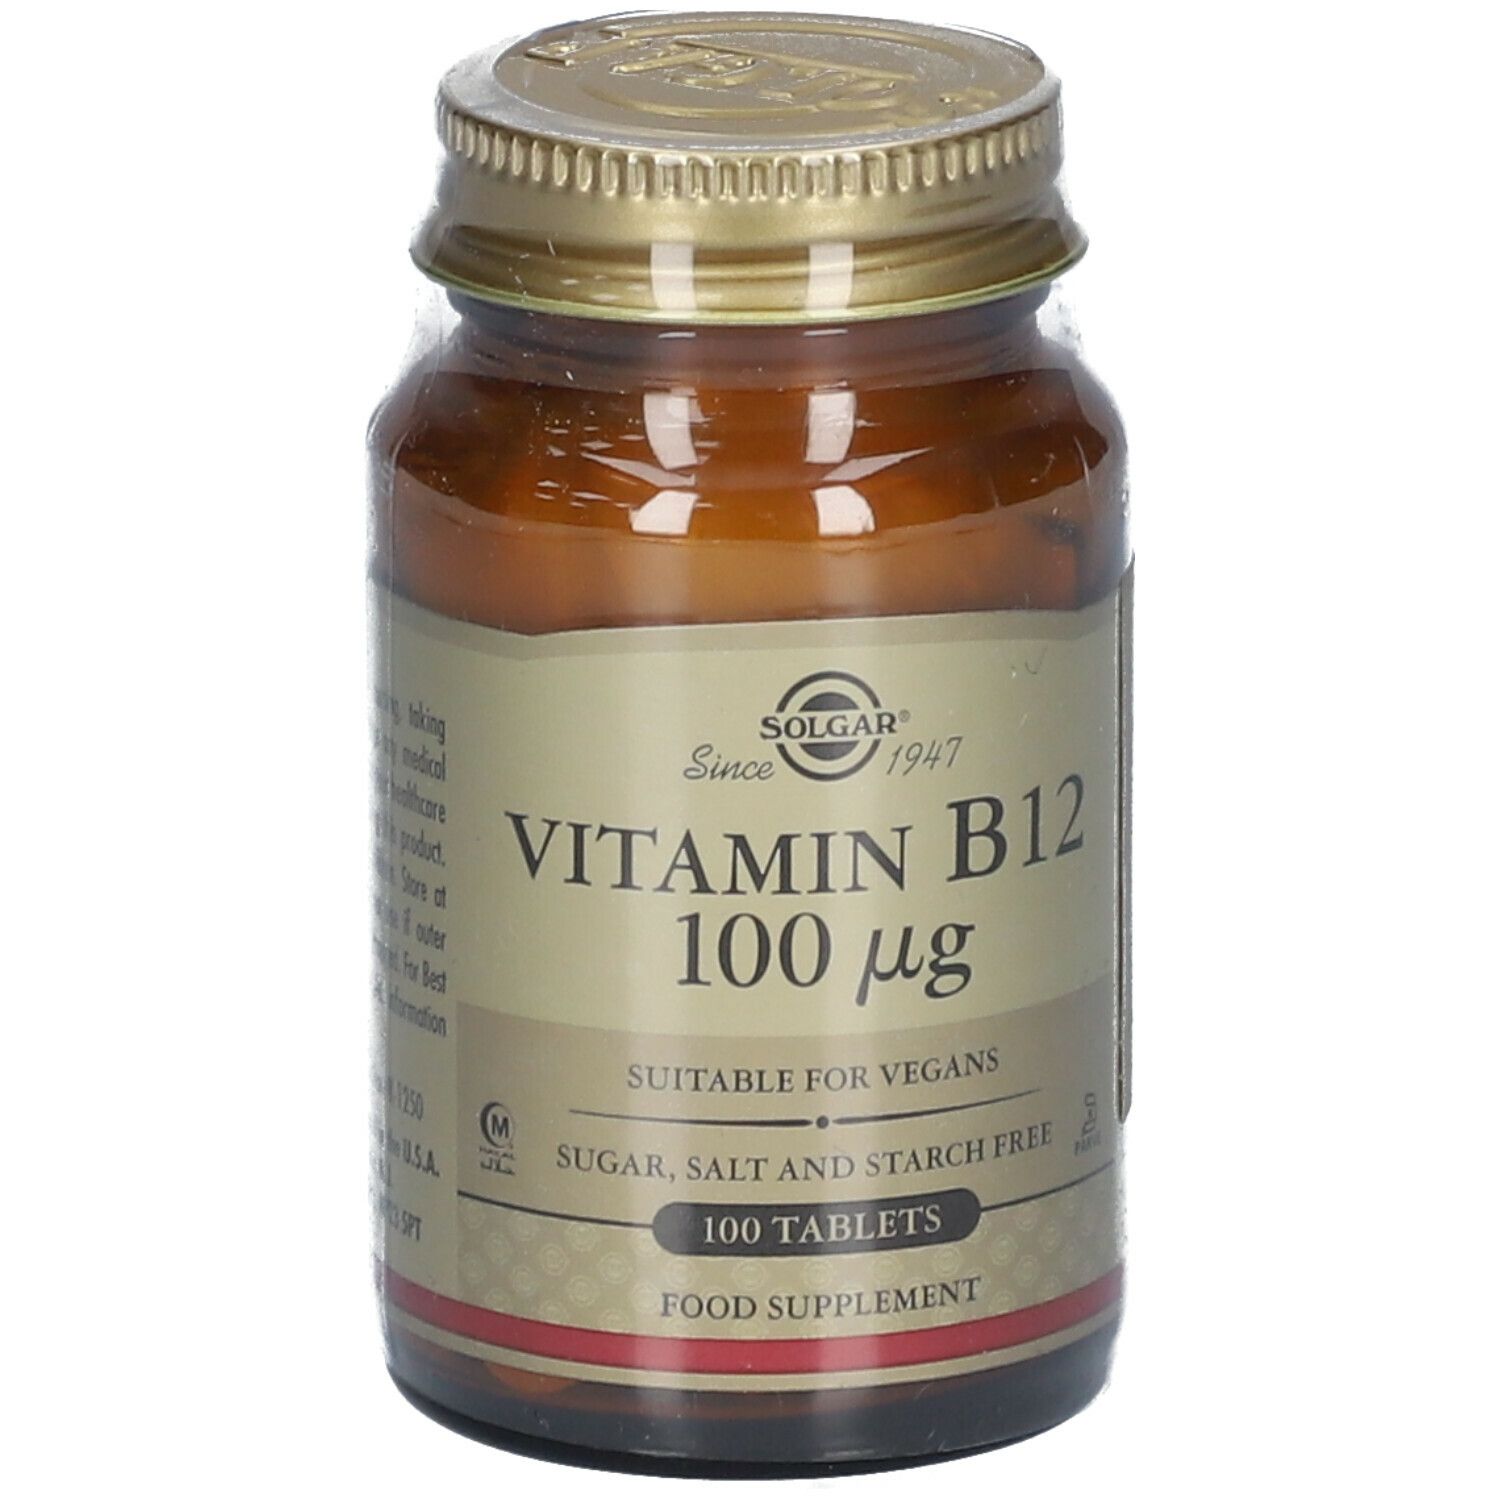 SOLGAR® Vitamine B12 100 µg